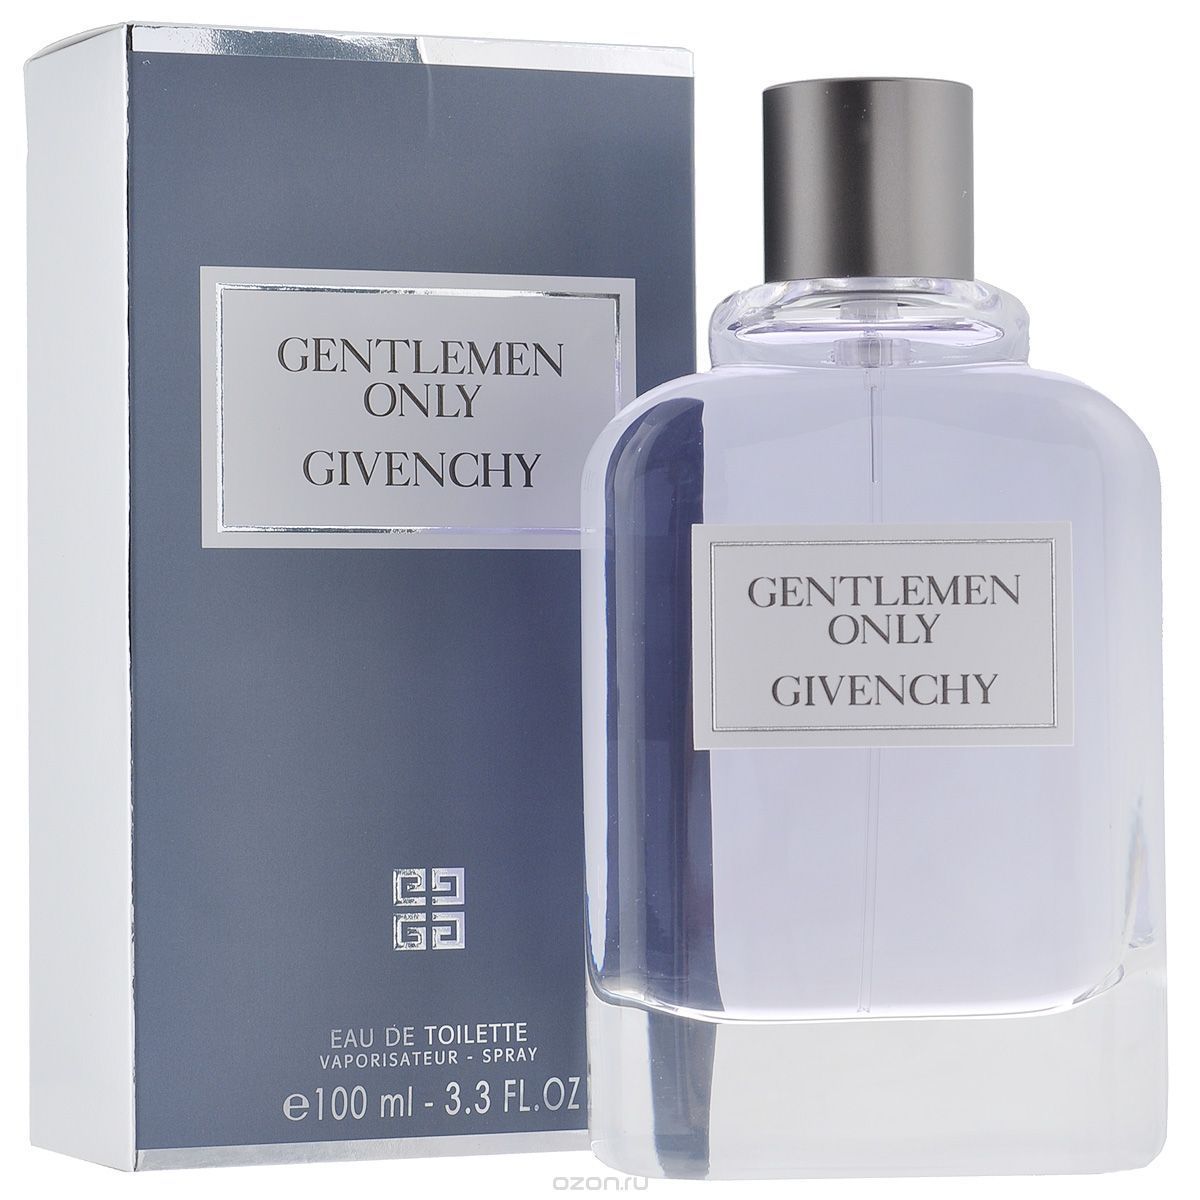 Givenchy GENTLEMEN ONLY for Men 3.3 oz EDT Eau de Toilette Spray * SEALED IN BOX - $83.59